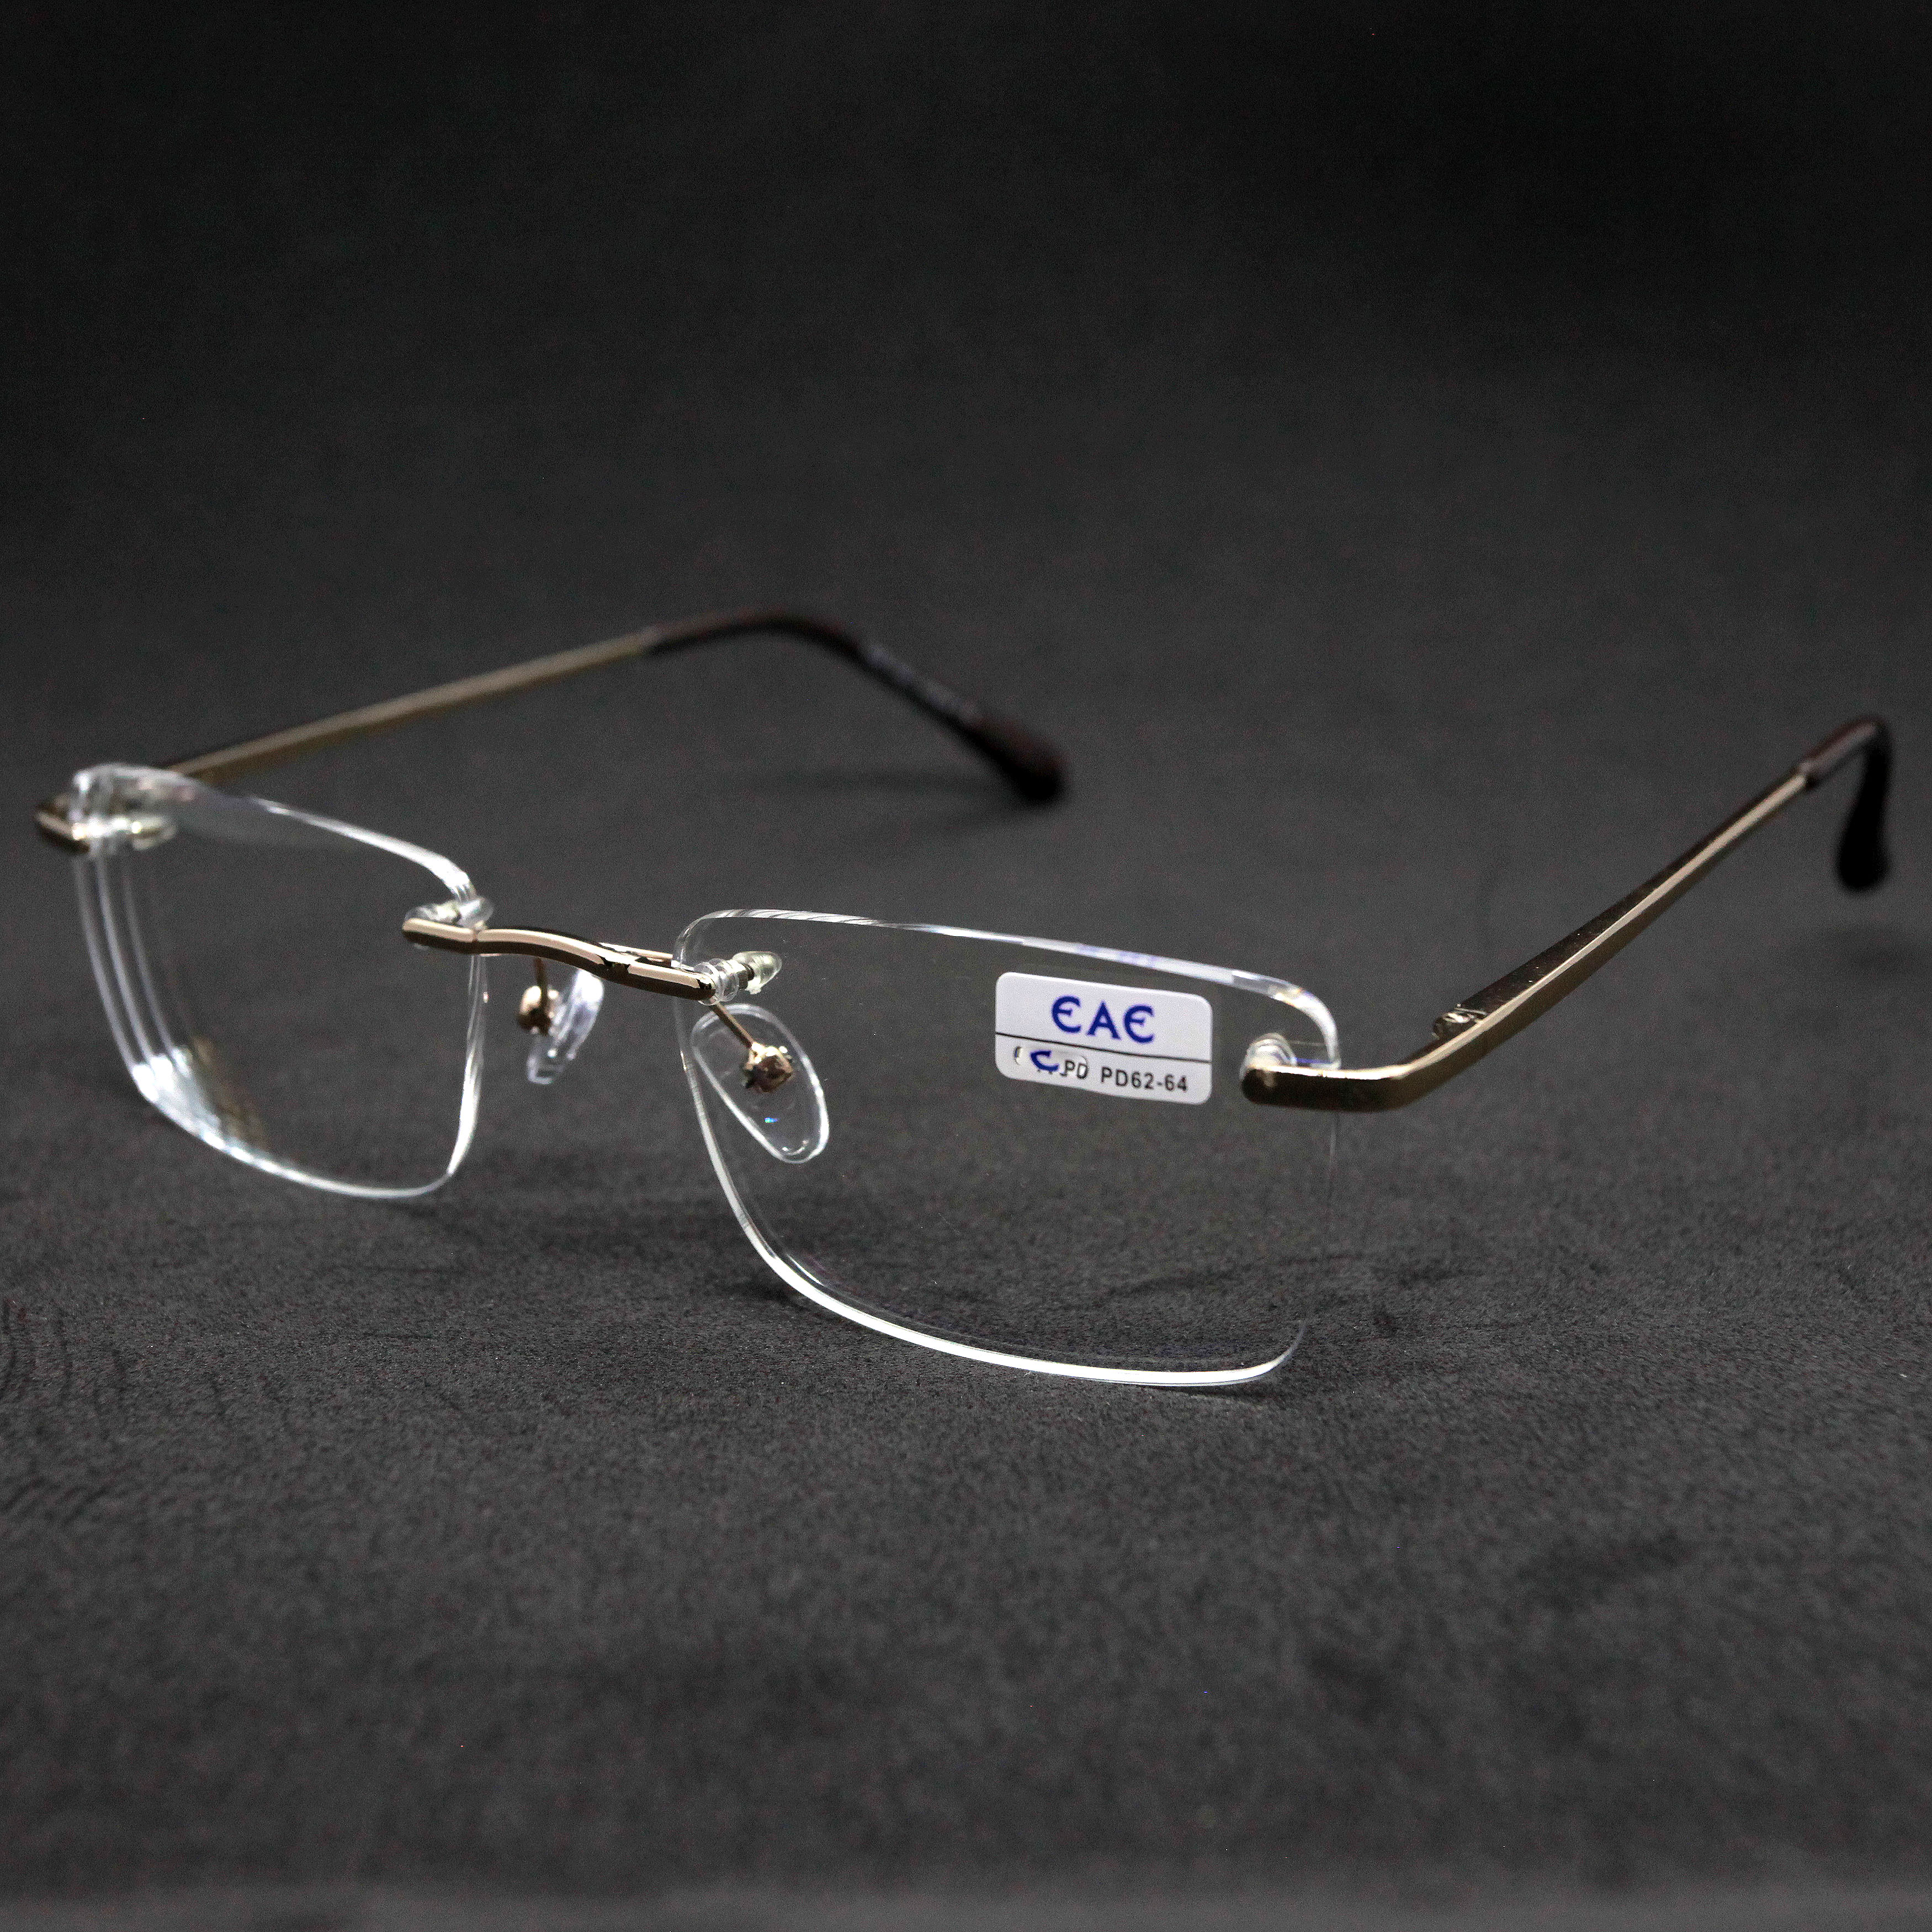 Безободковые очки EAE 1037 -1.50, без футляра, антиблик, цвет серый, РЦ 62-64